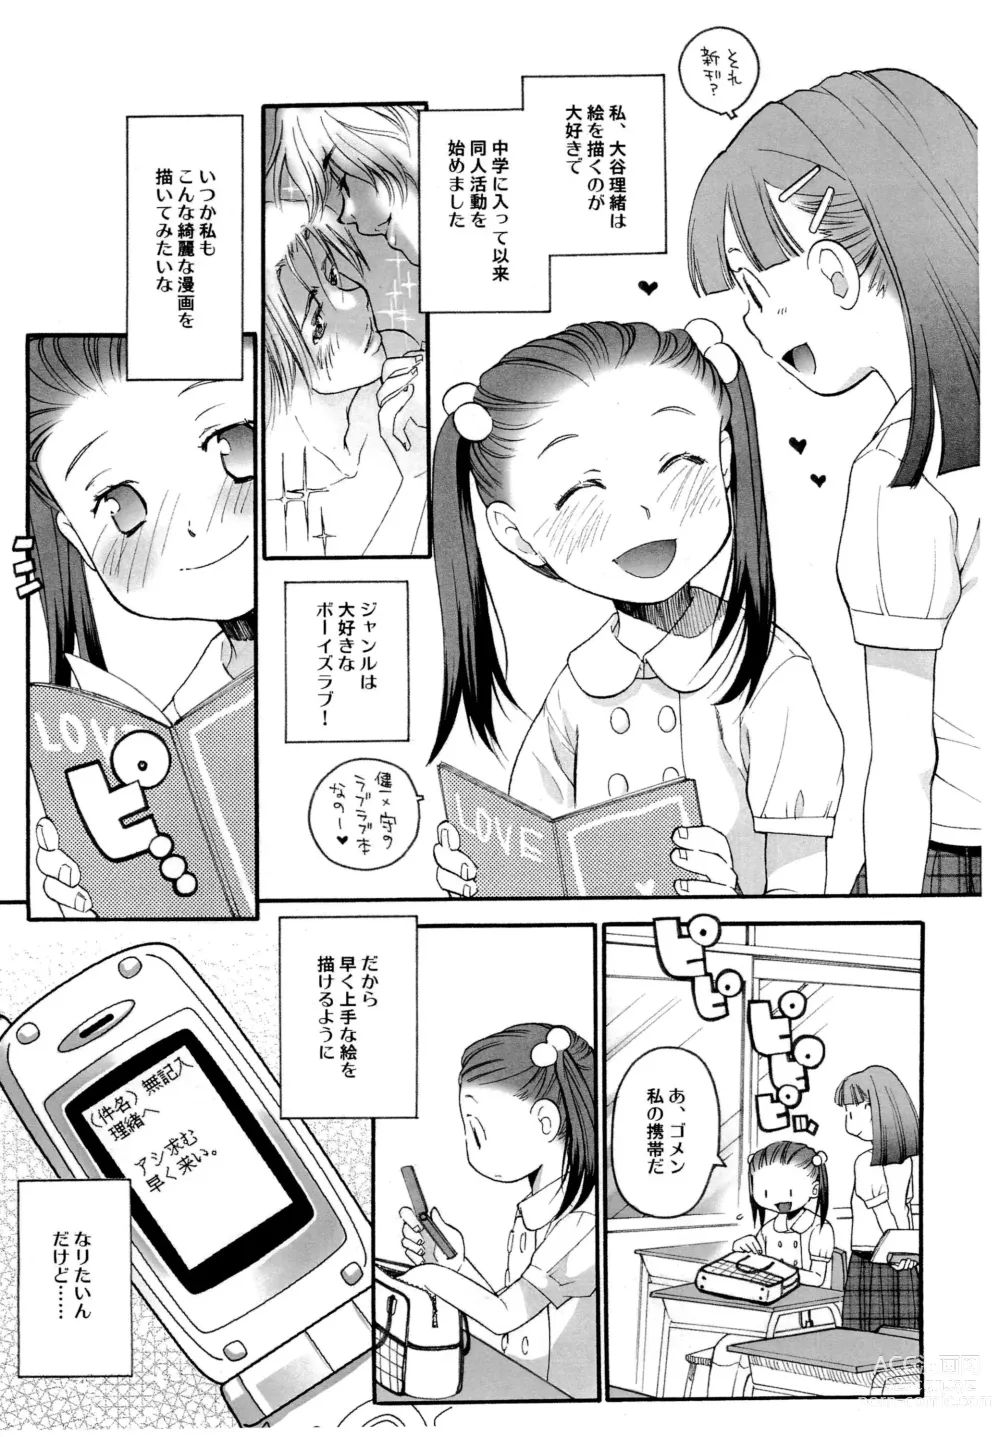 Page 6 of doujinshi Komi Komi